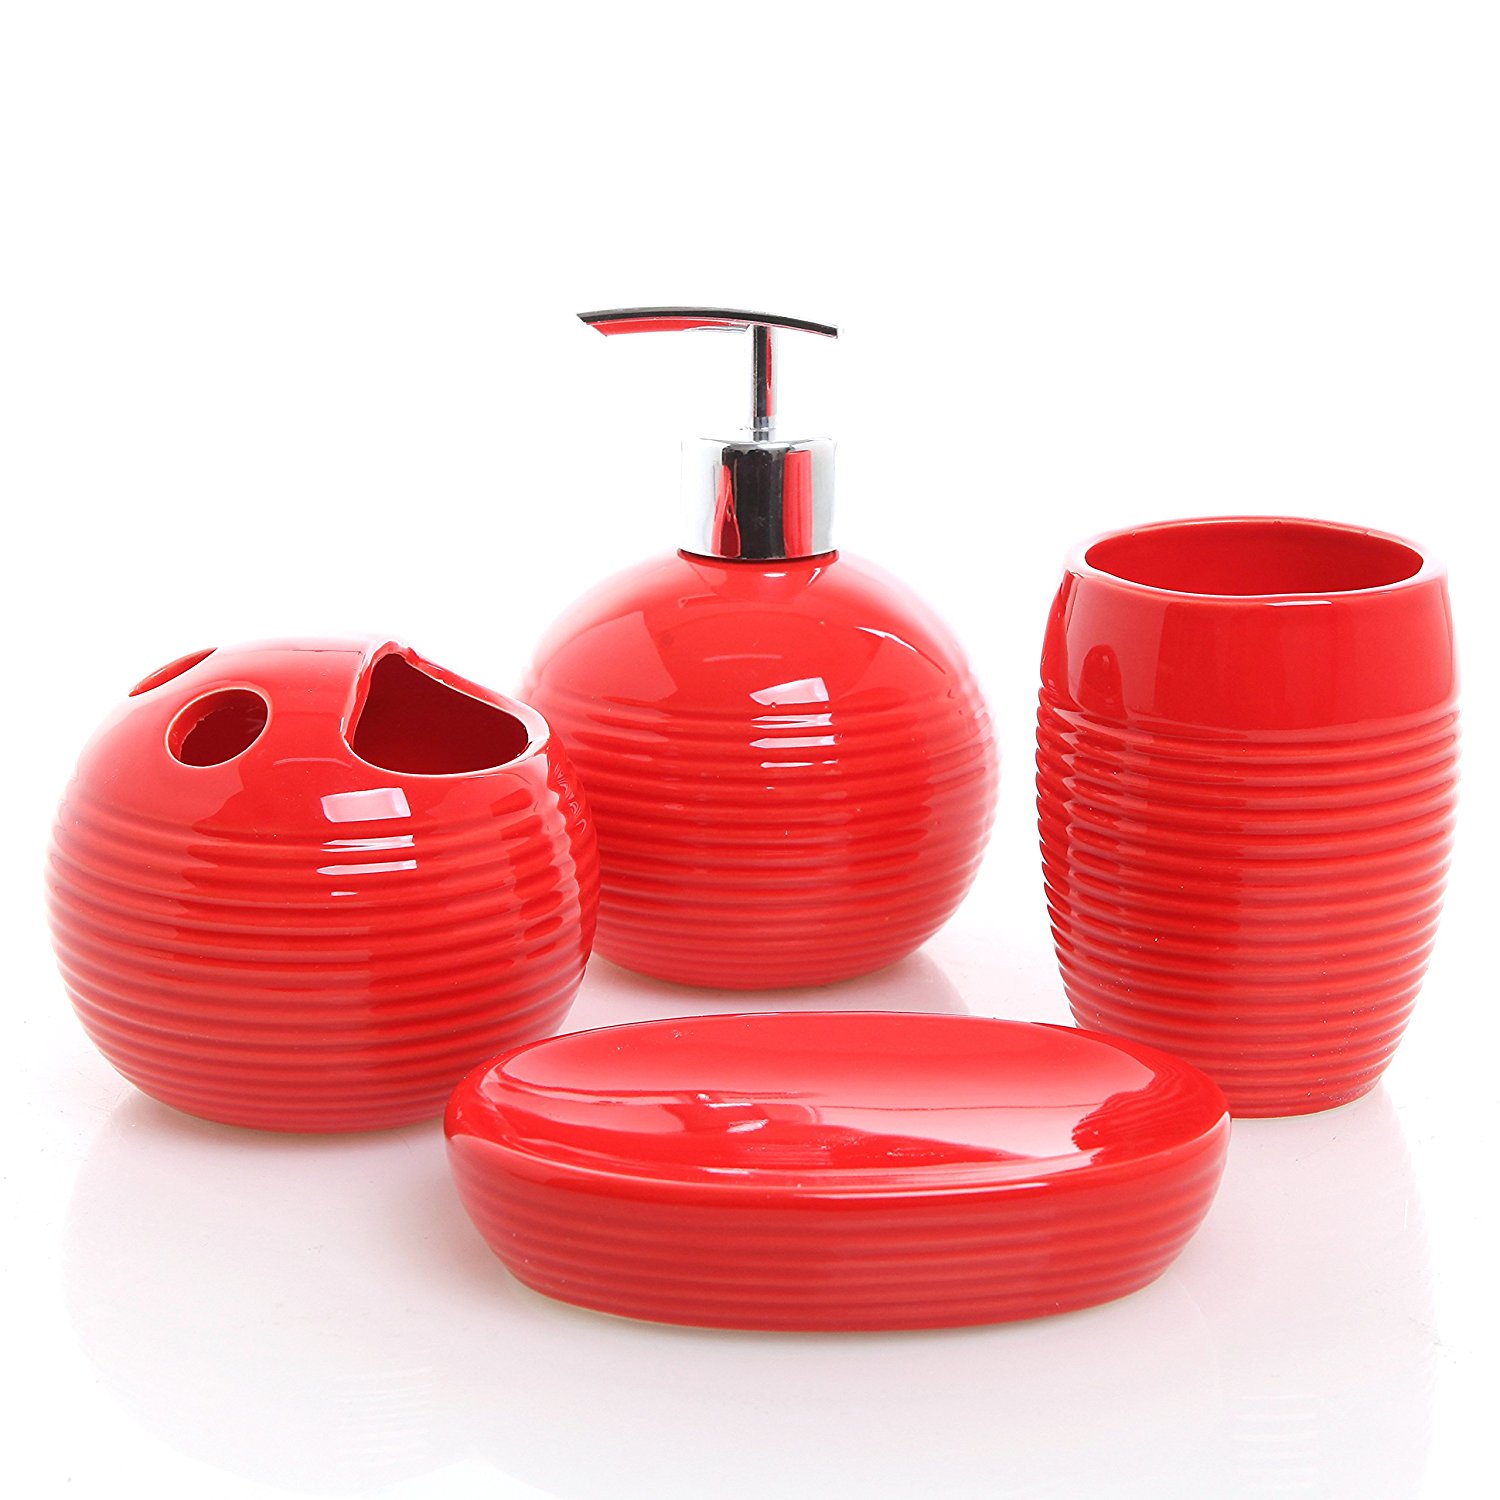 4 Piece Red Ceramic Full Bathroom Accessory Set - Toothbrush Holder, Tumbler, Soap Dish, Pump Dispenser